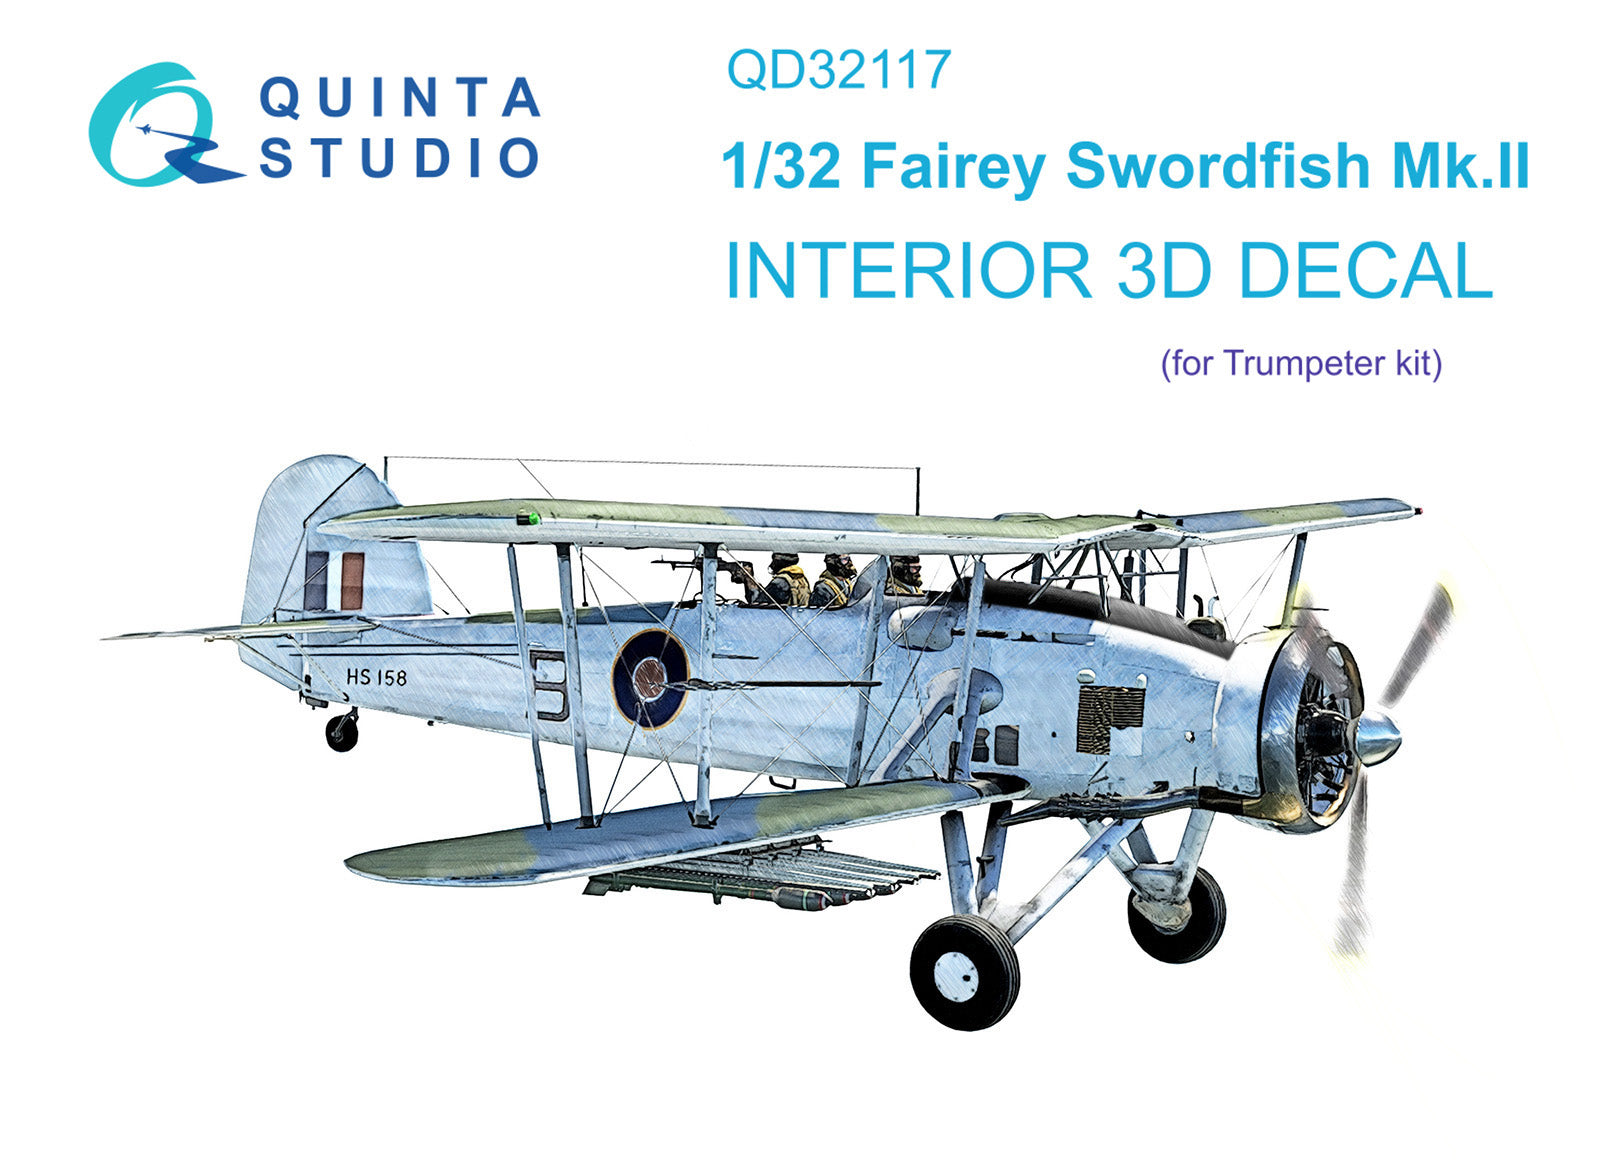 Quinta Studio - 1/32 Fairey Swordfish Mk.II QD32117 for Trumpeter kit